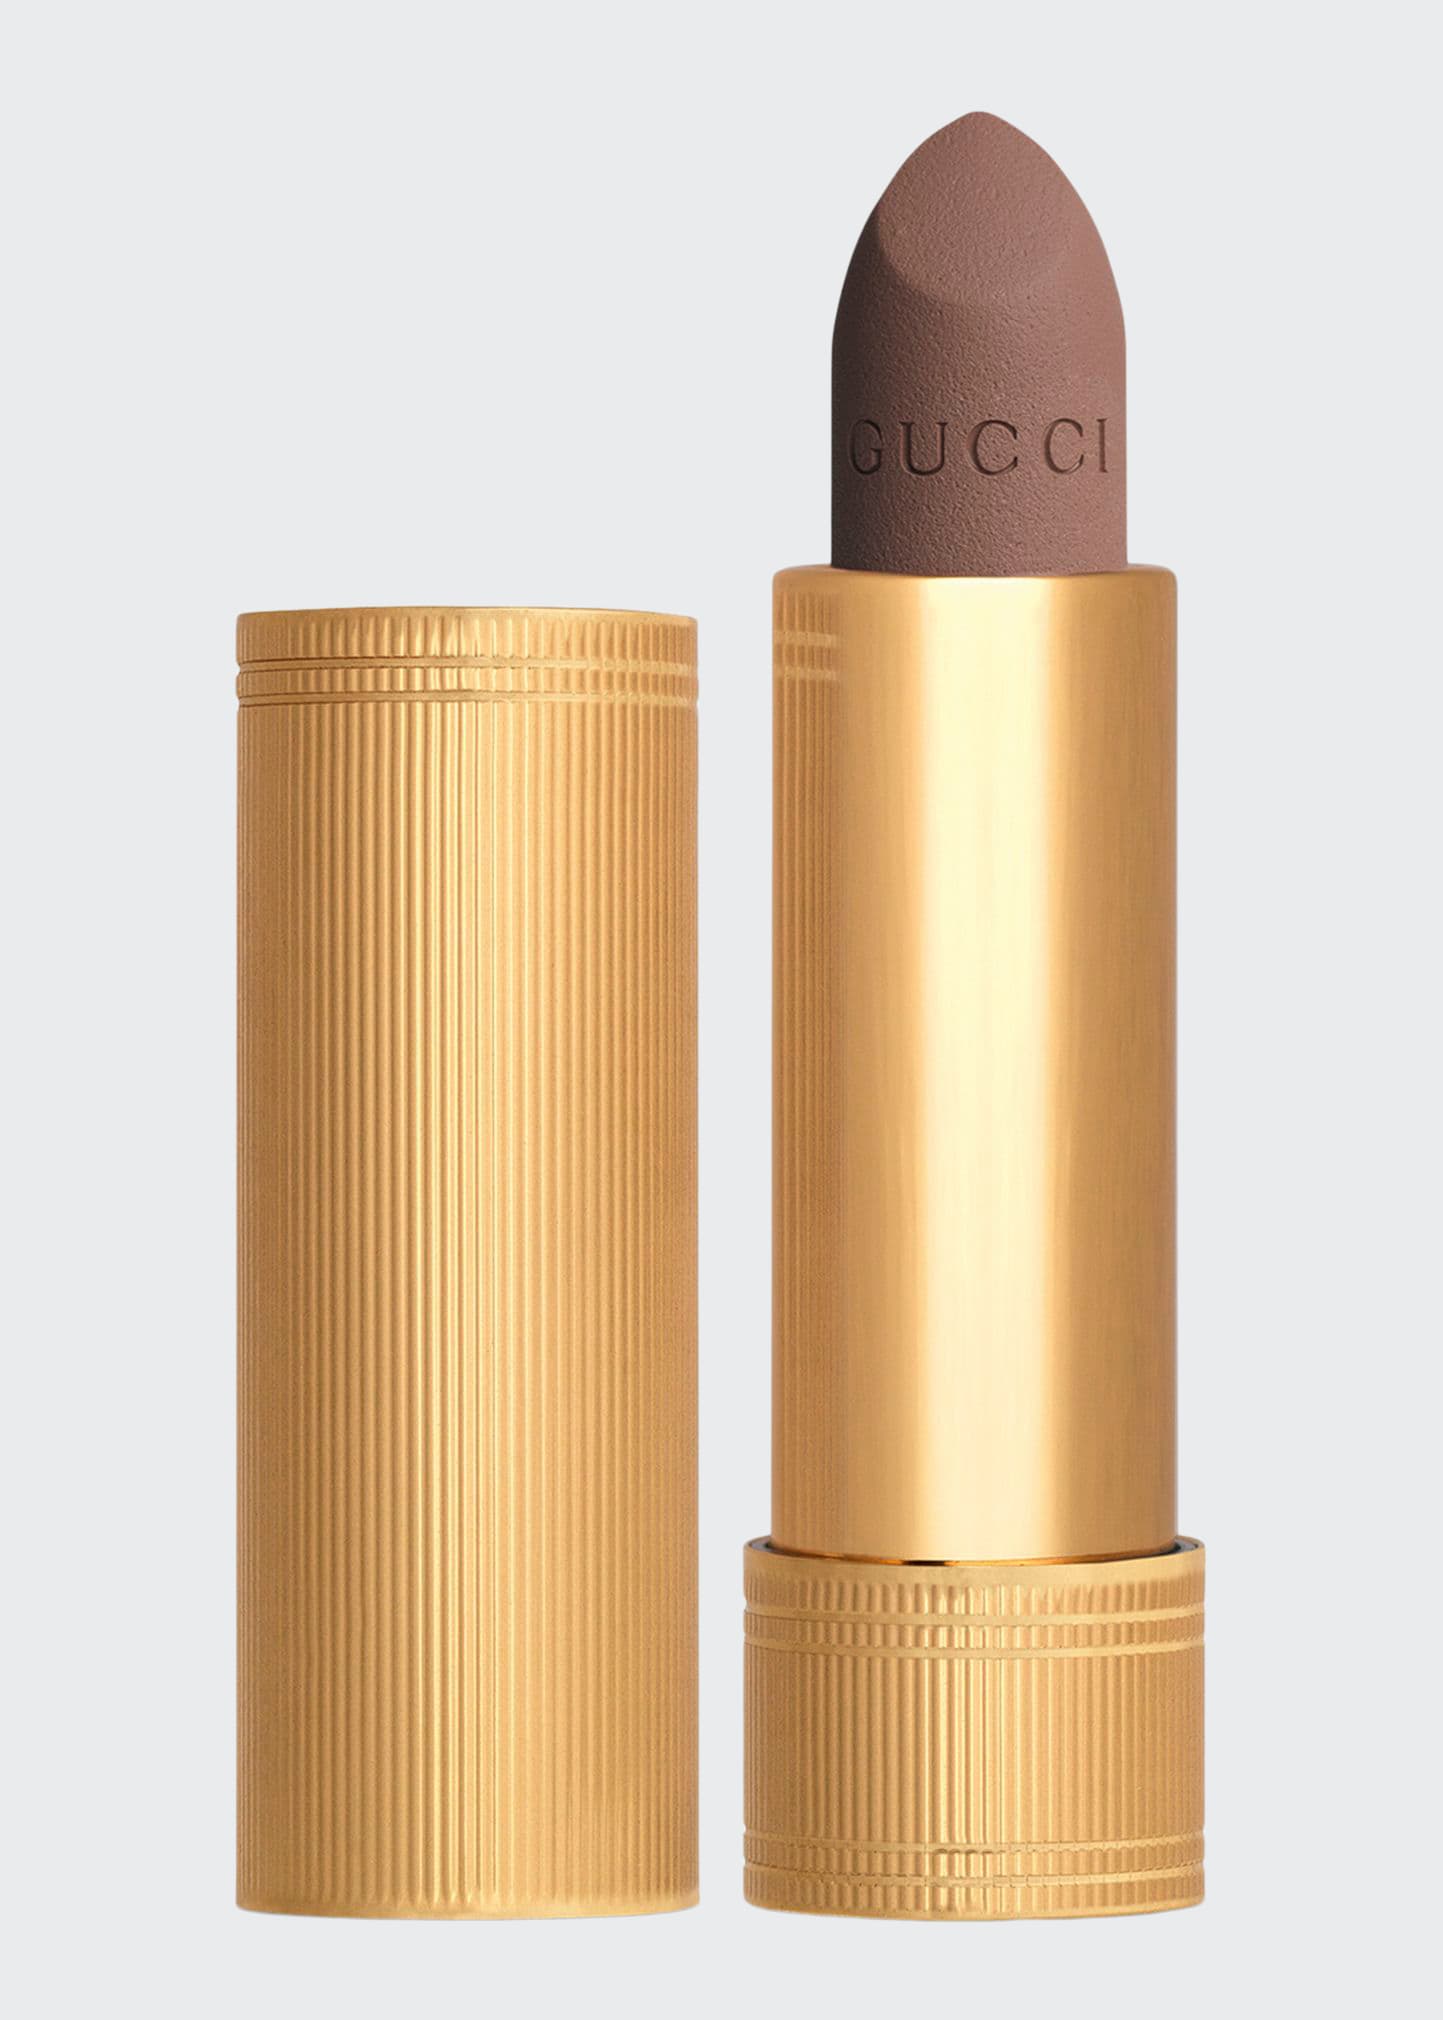 Gucci Rouge A Levres Matte Lipstick In 105 Susan Nude